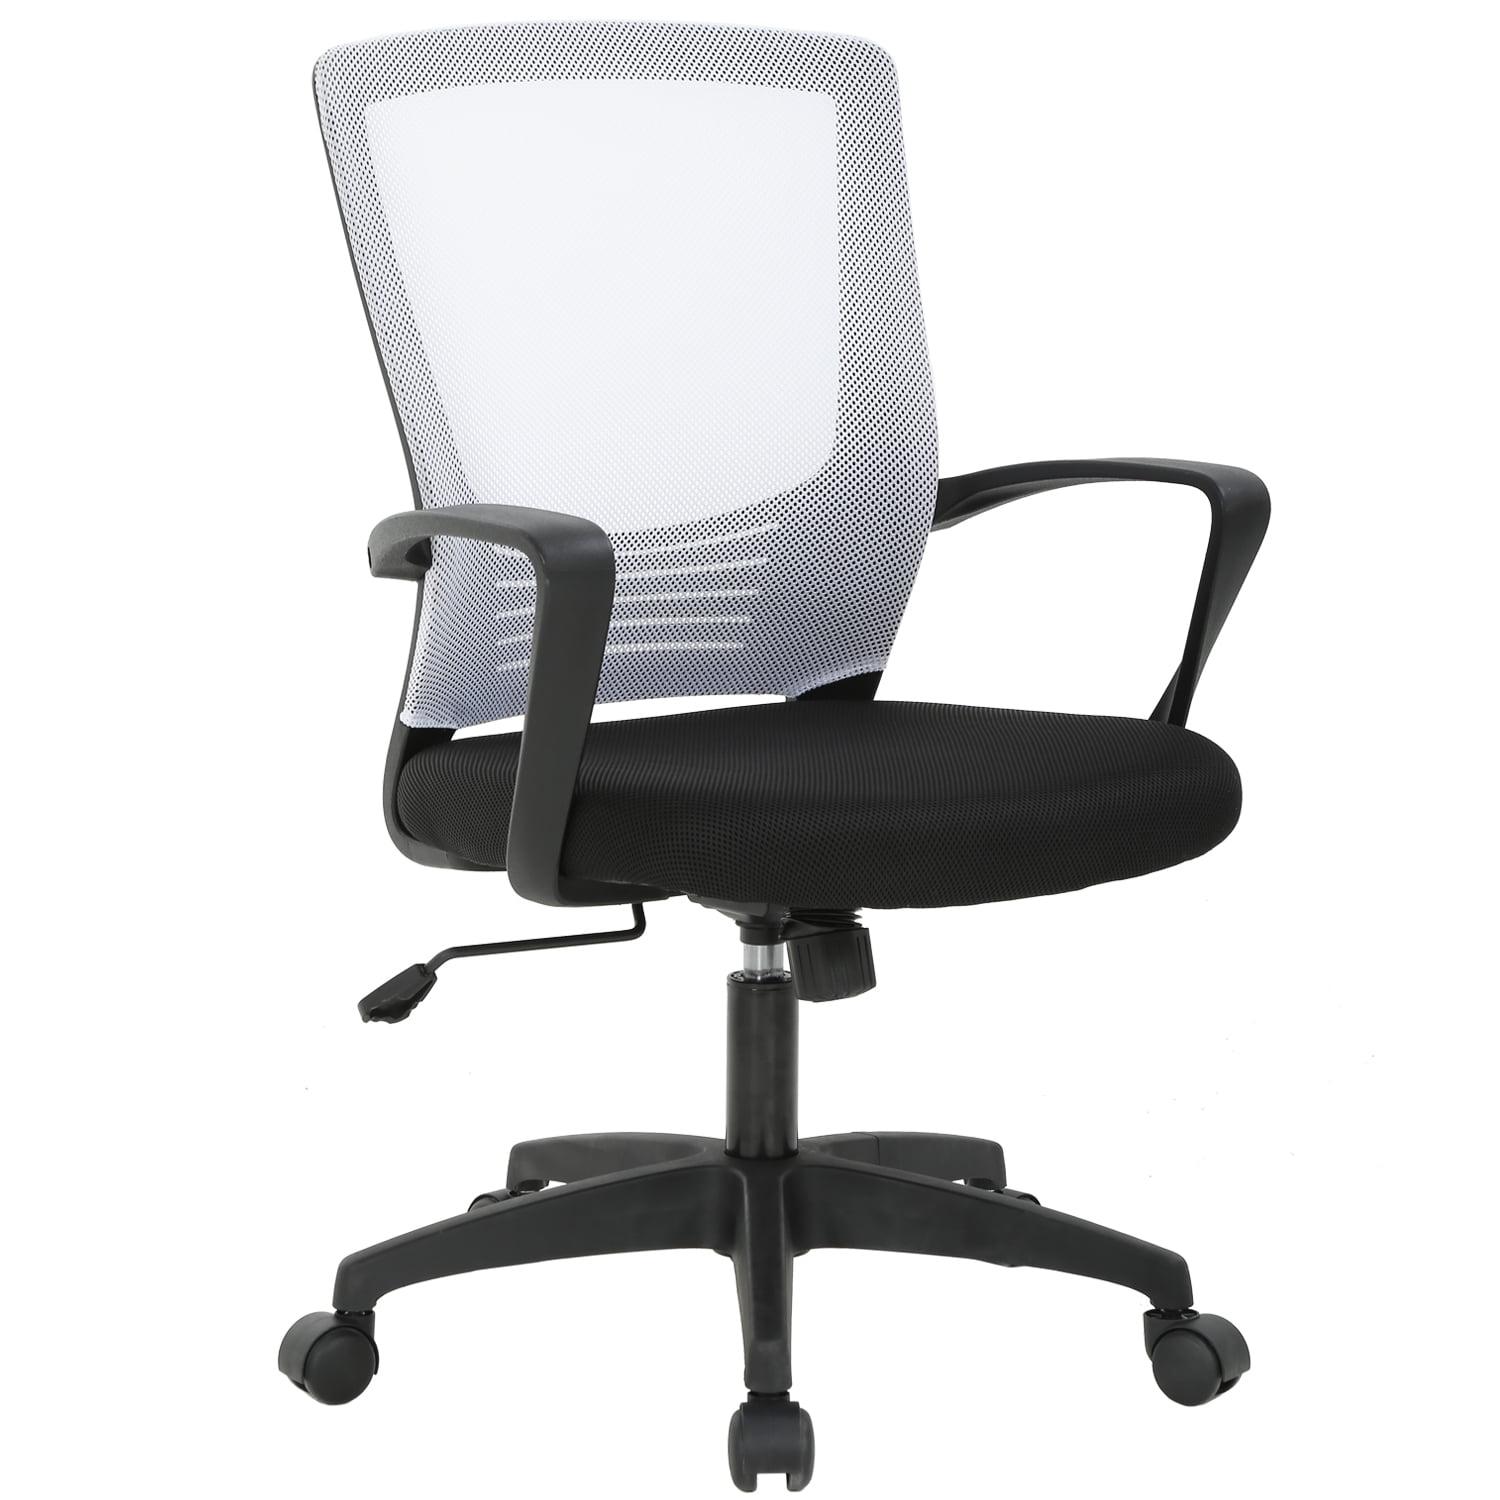 Mesh Chair Ergonomic Executive Swivel Office Chair Computer Desk Black White New